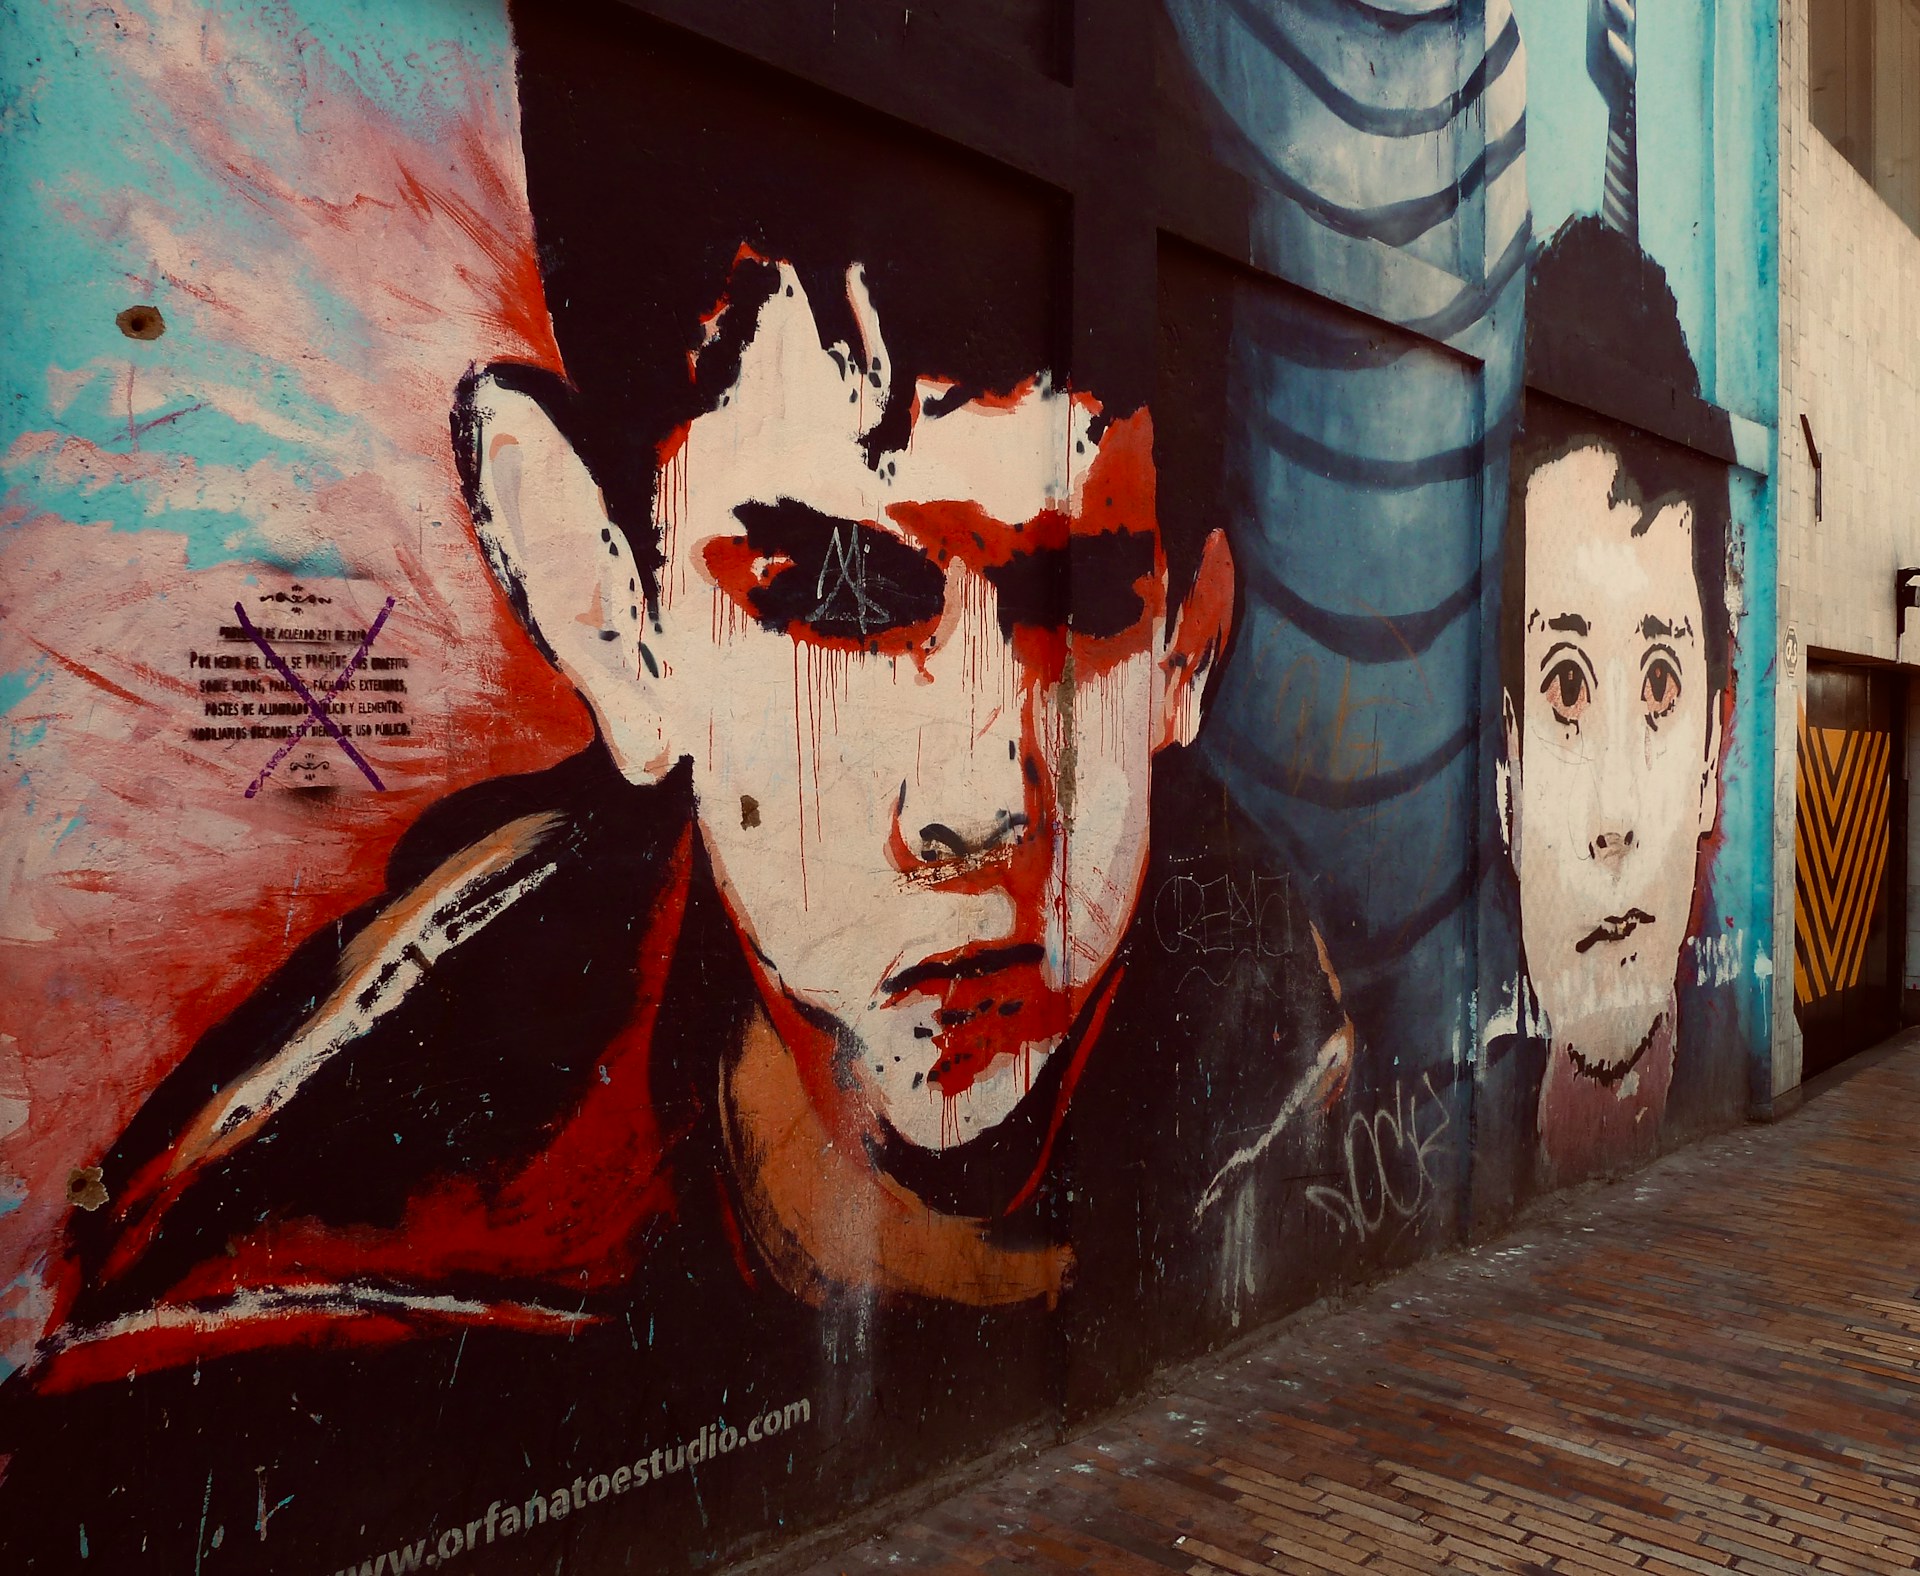 Ontdek de Kleurrijke Wereld van Street Art met de Originele Bogotá Graffiti Tour